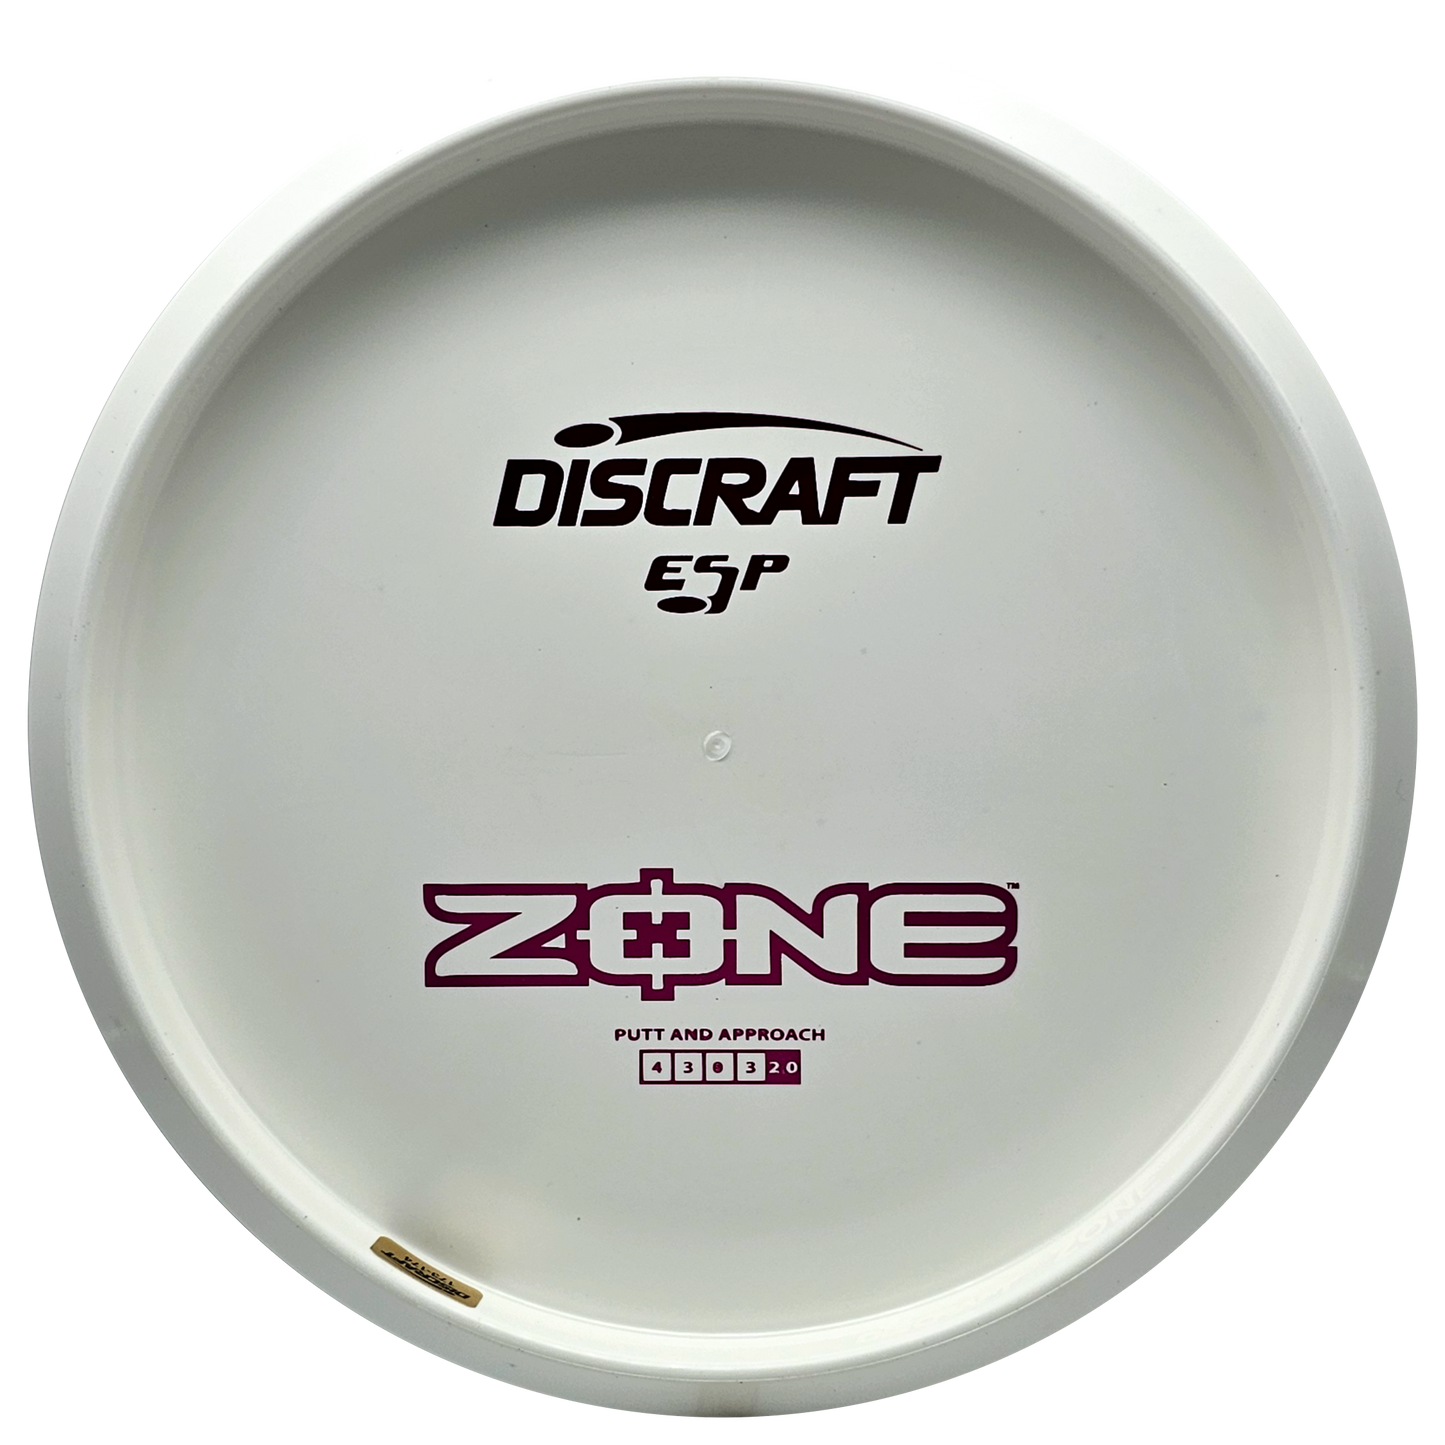 Discraft White ESP Zone Bottom Stamp